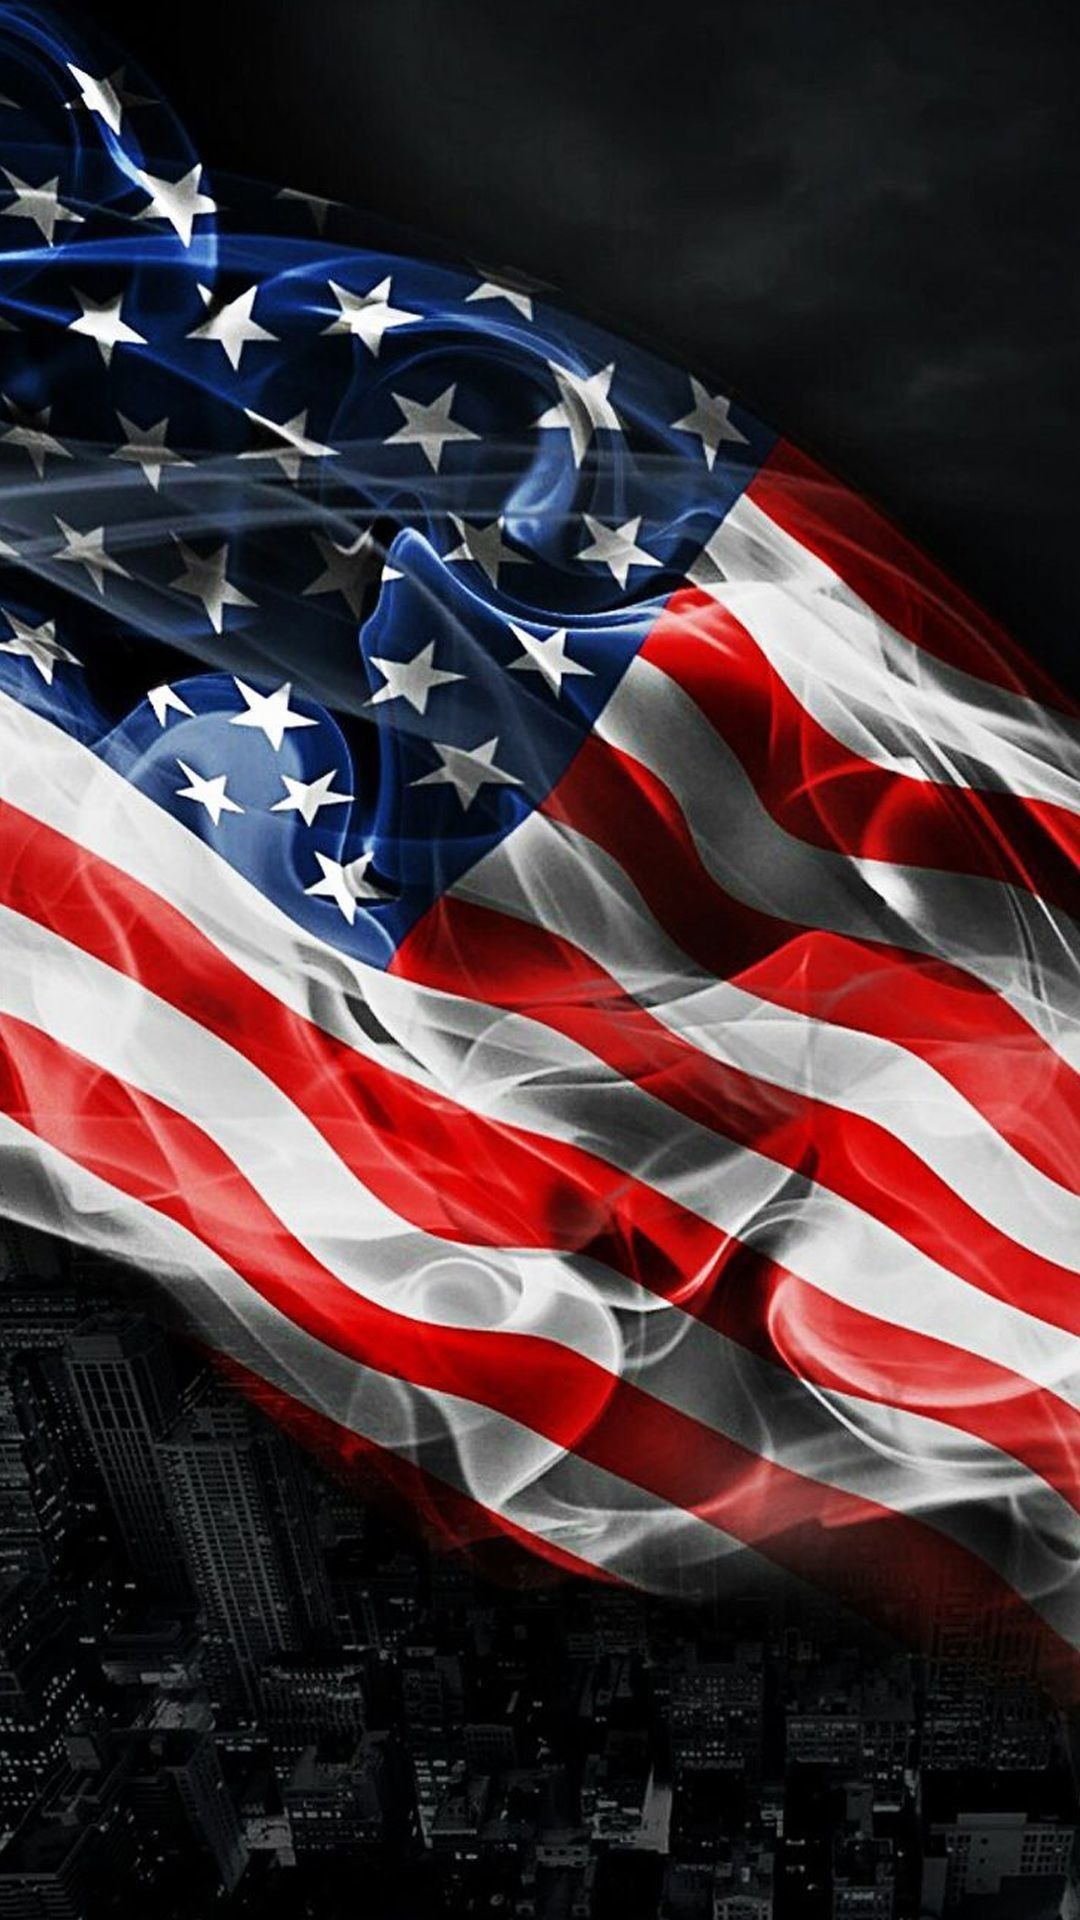 American Flag iPhone X Wallpaper iPhone Wallpaper. American flag wallpaper, America flag wallpaper, Usa flag wallpaper